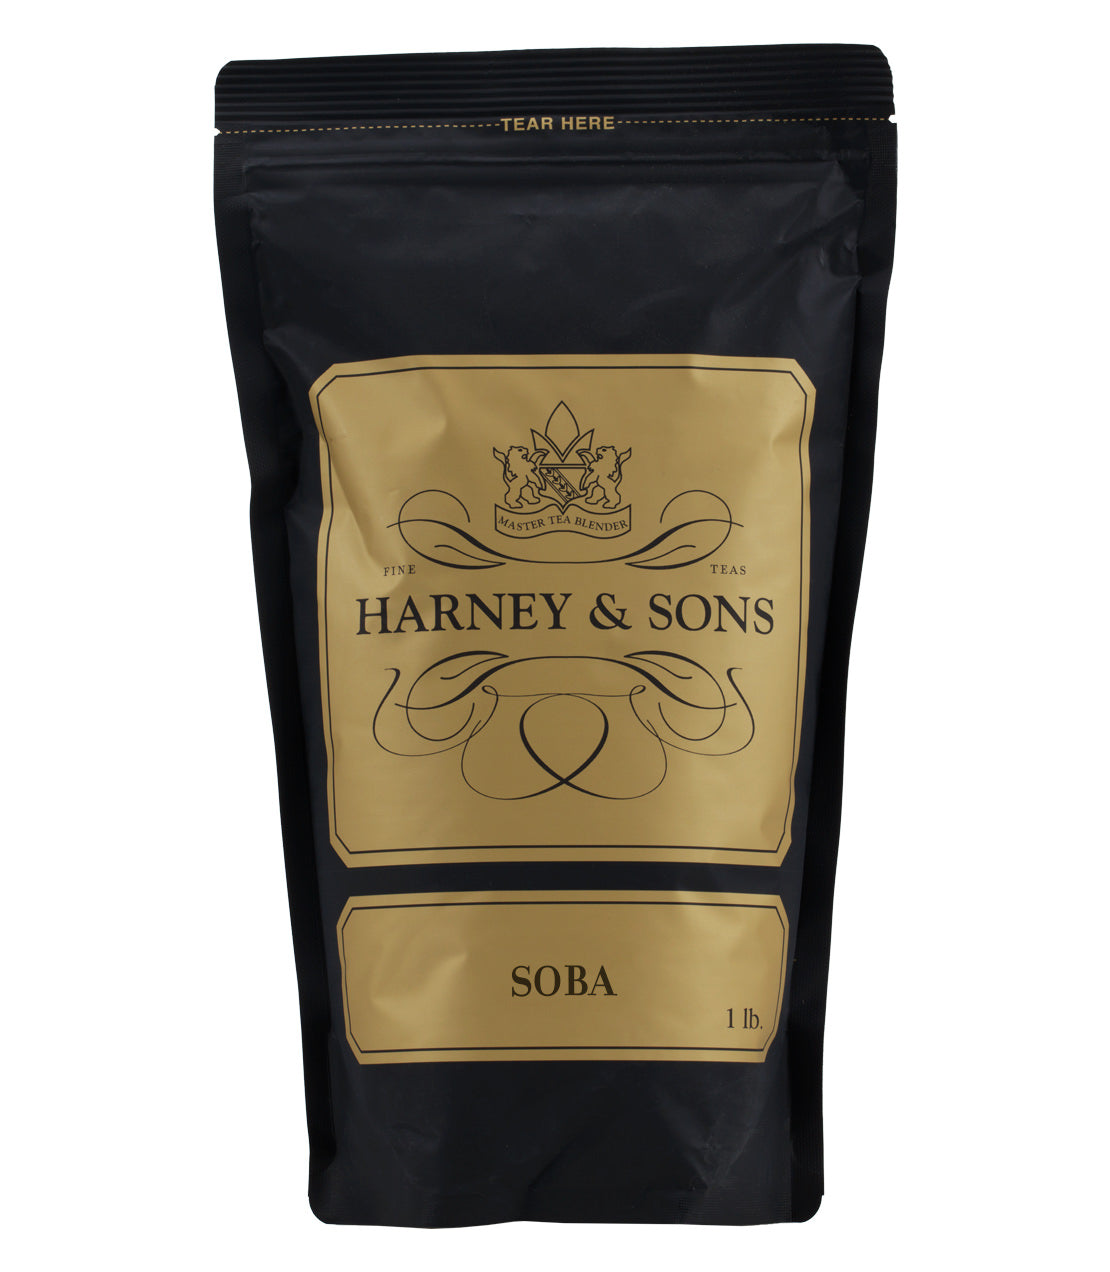 Soba Roasted Buckwheat - Loose 1 lb. Bag - Harney & Sons Fine Teas